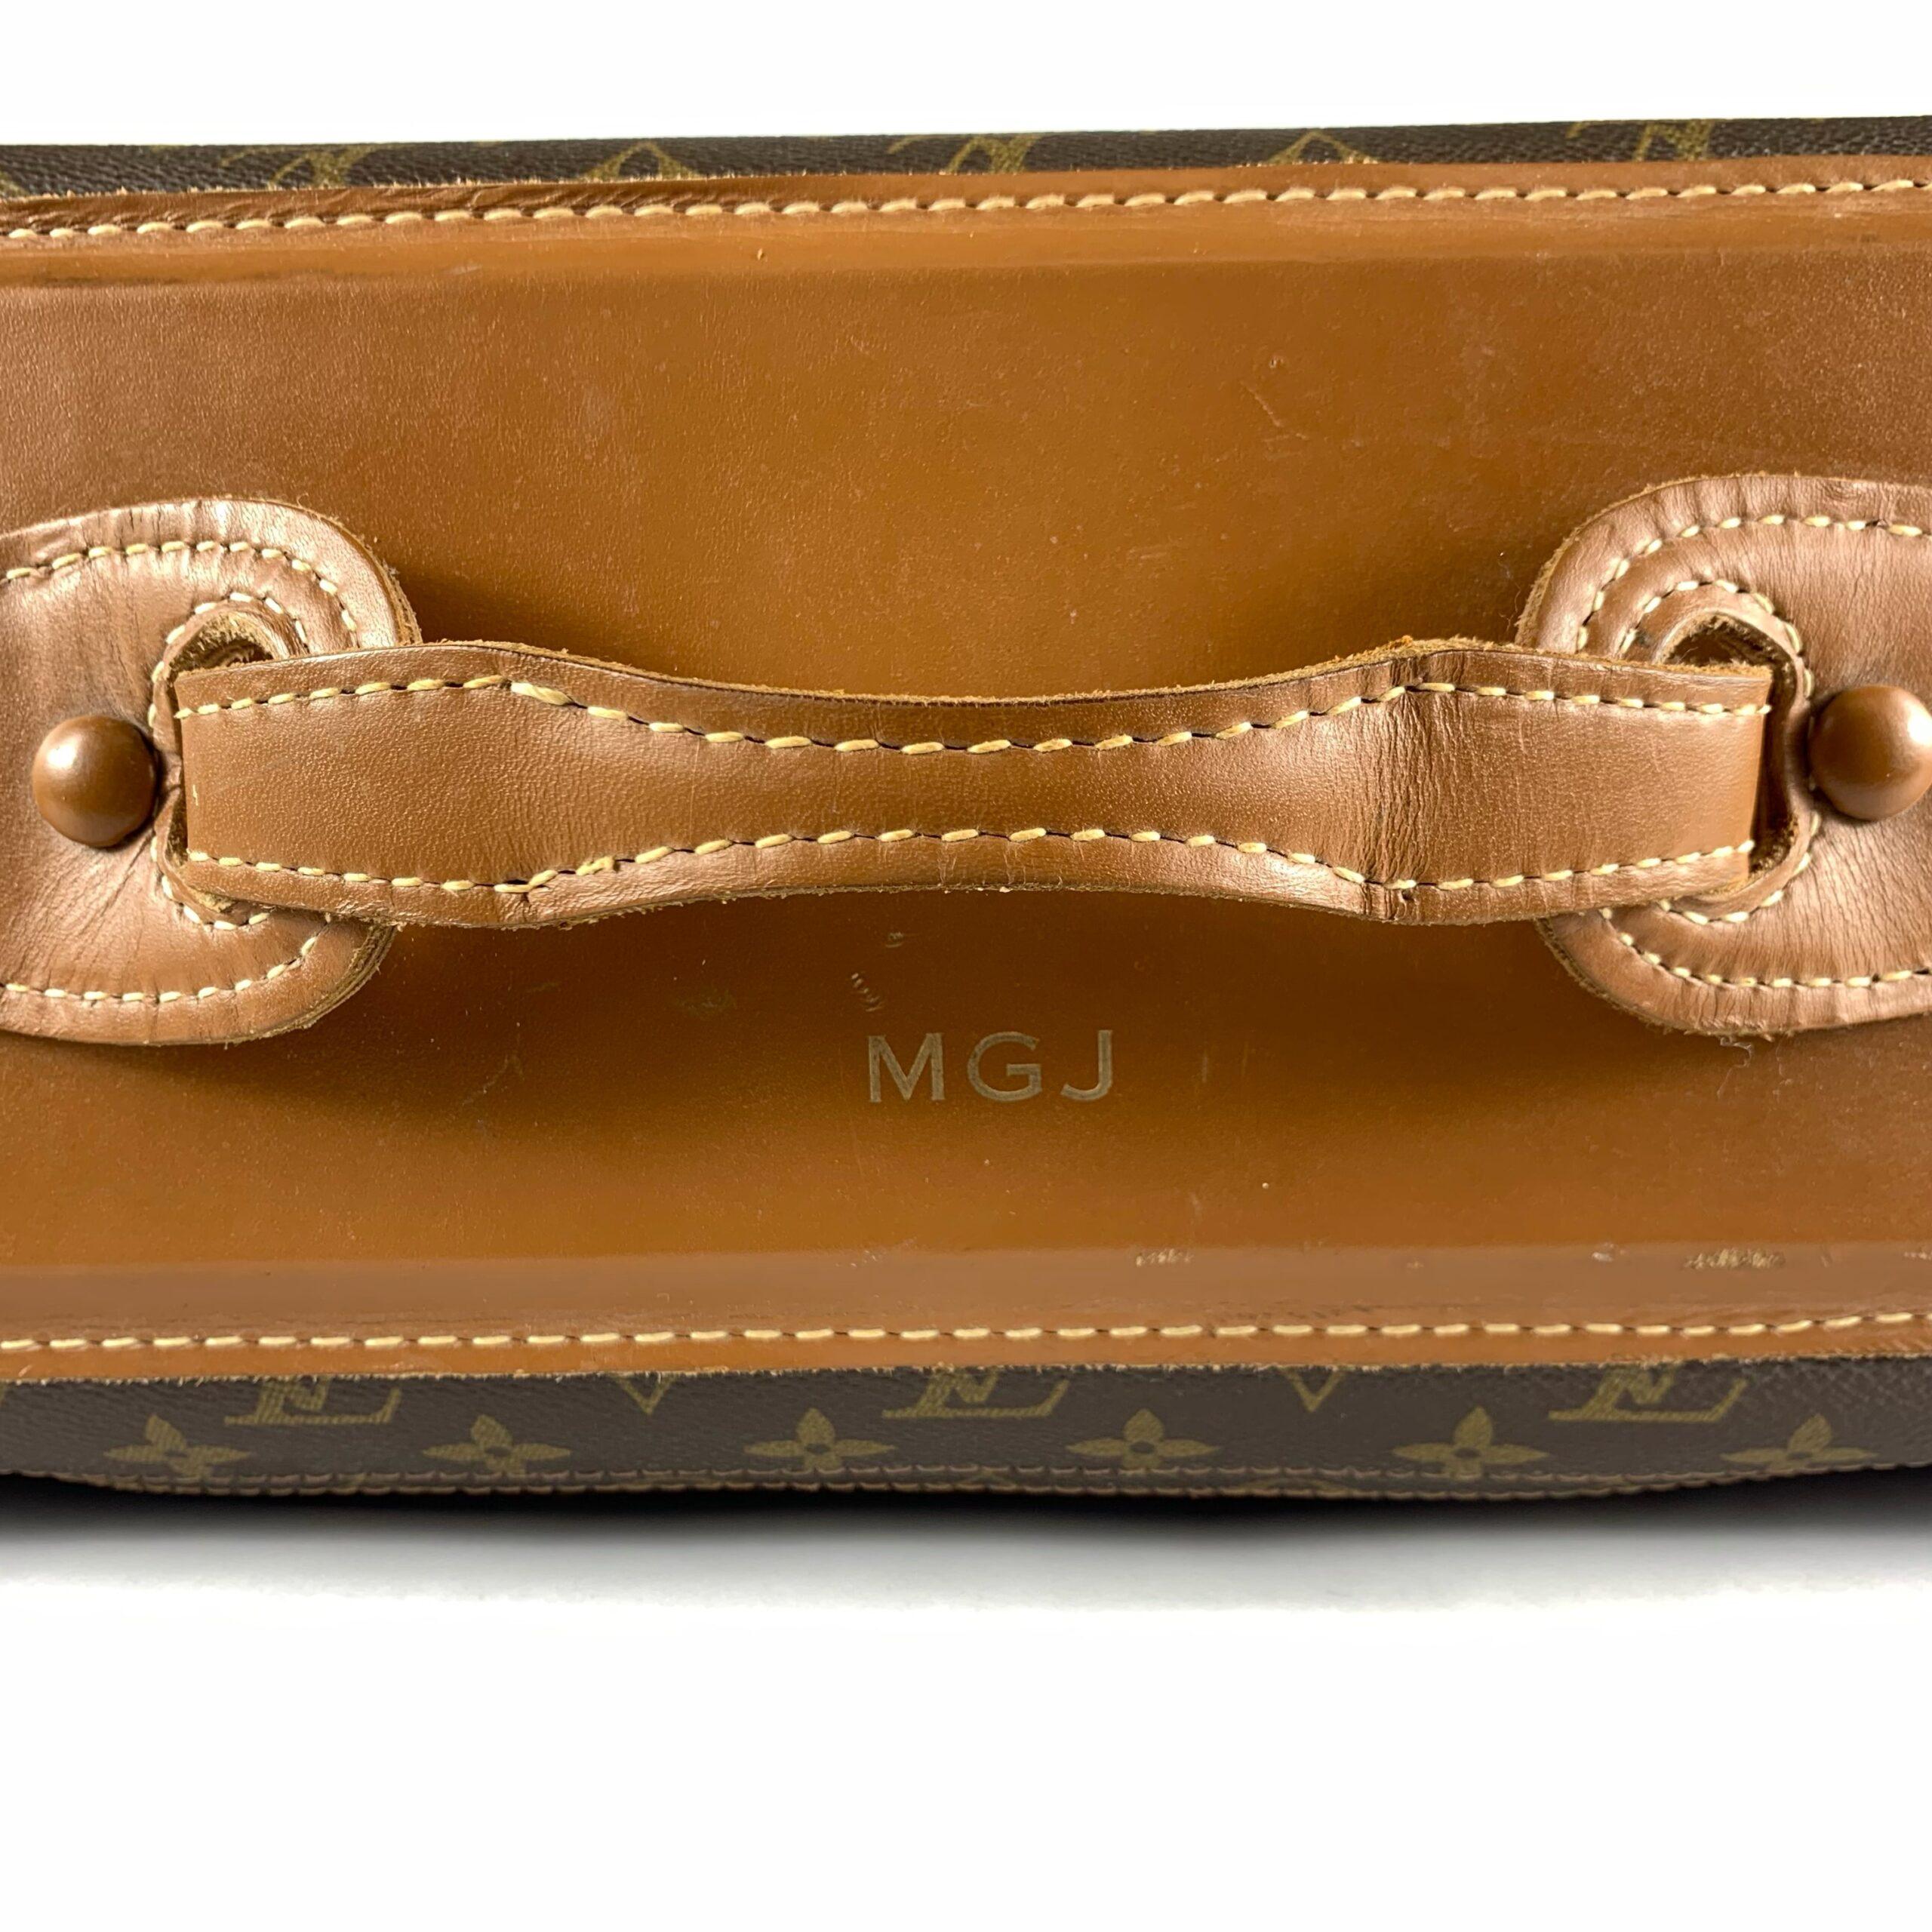 Sold at Auction: Five Louis Vuitton Monogram Leather 'Pullman